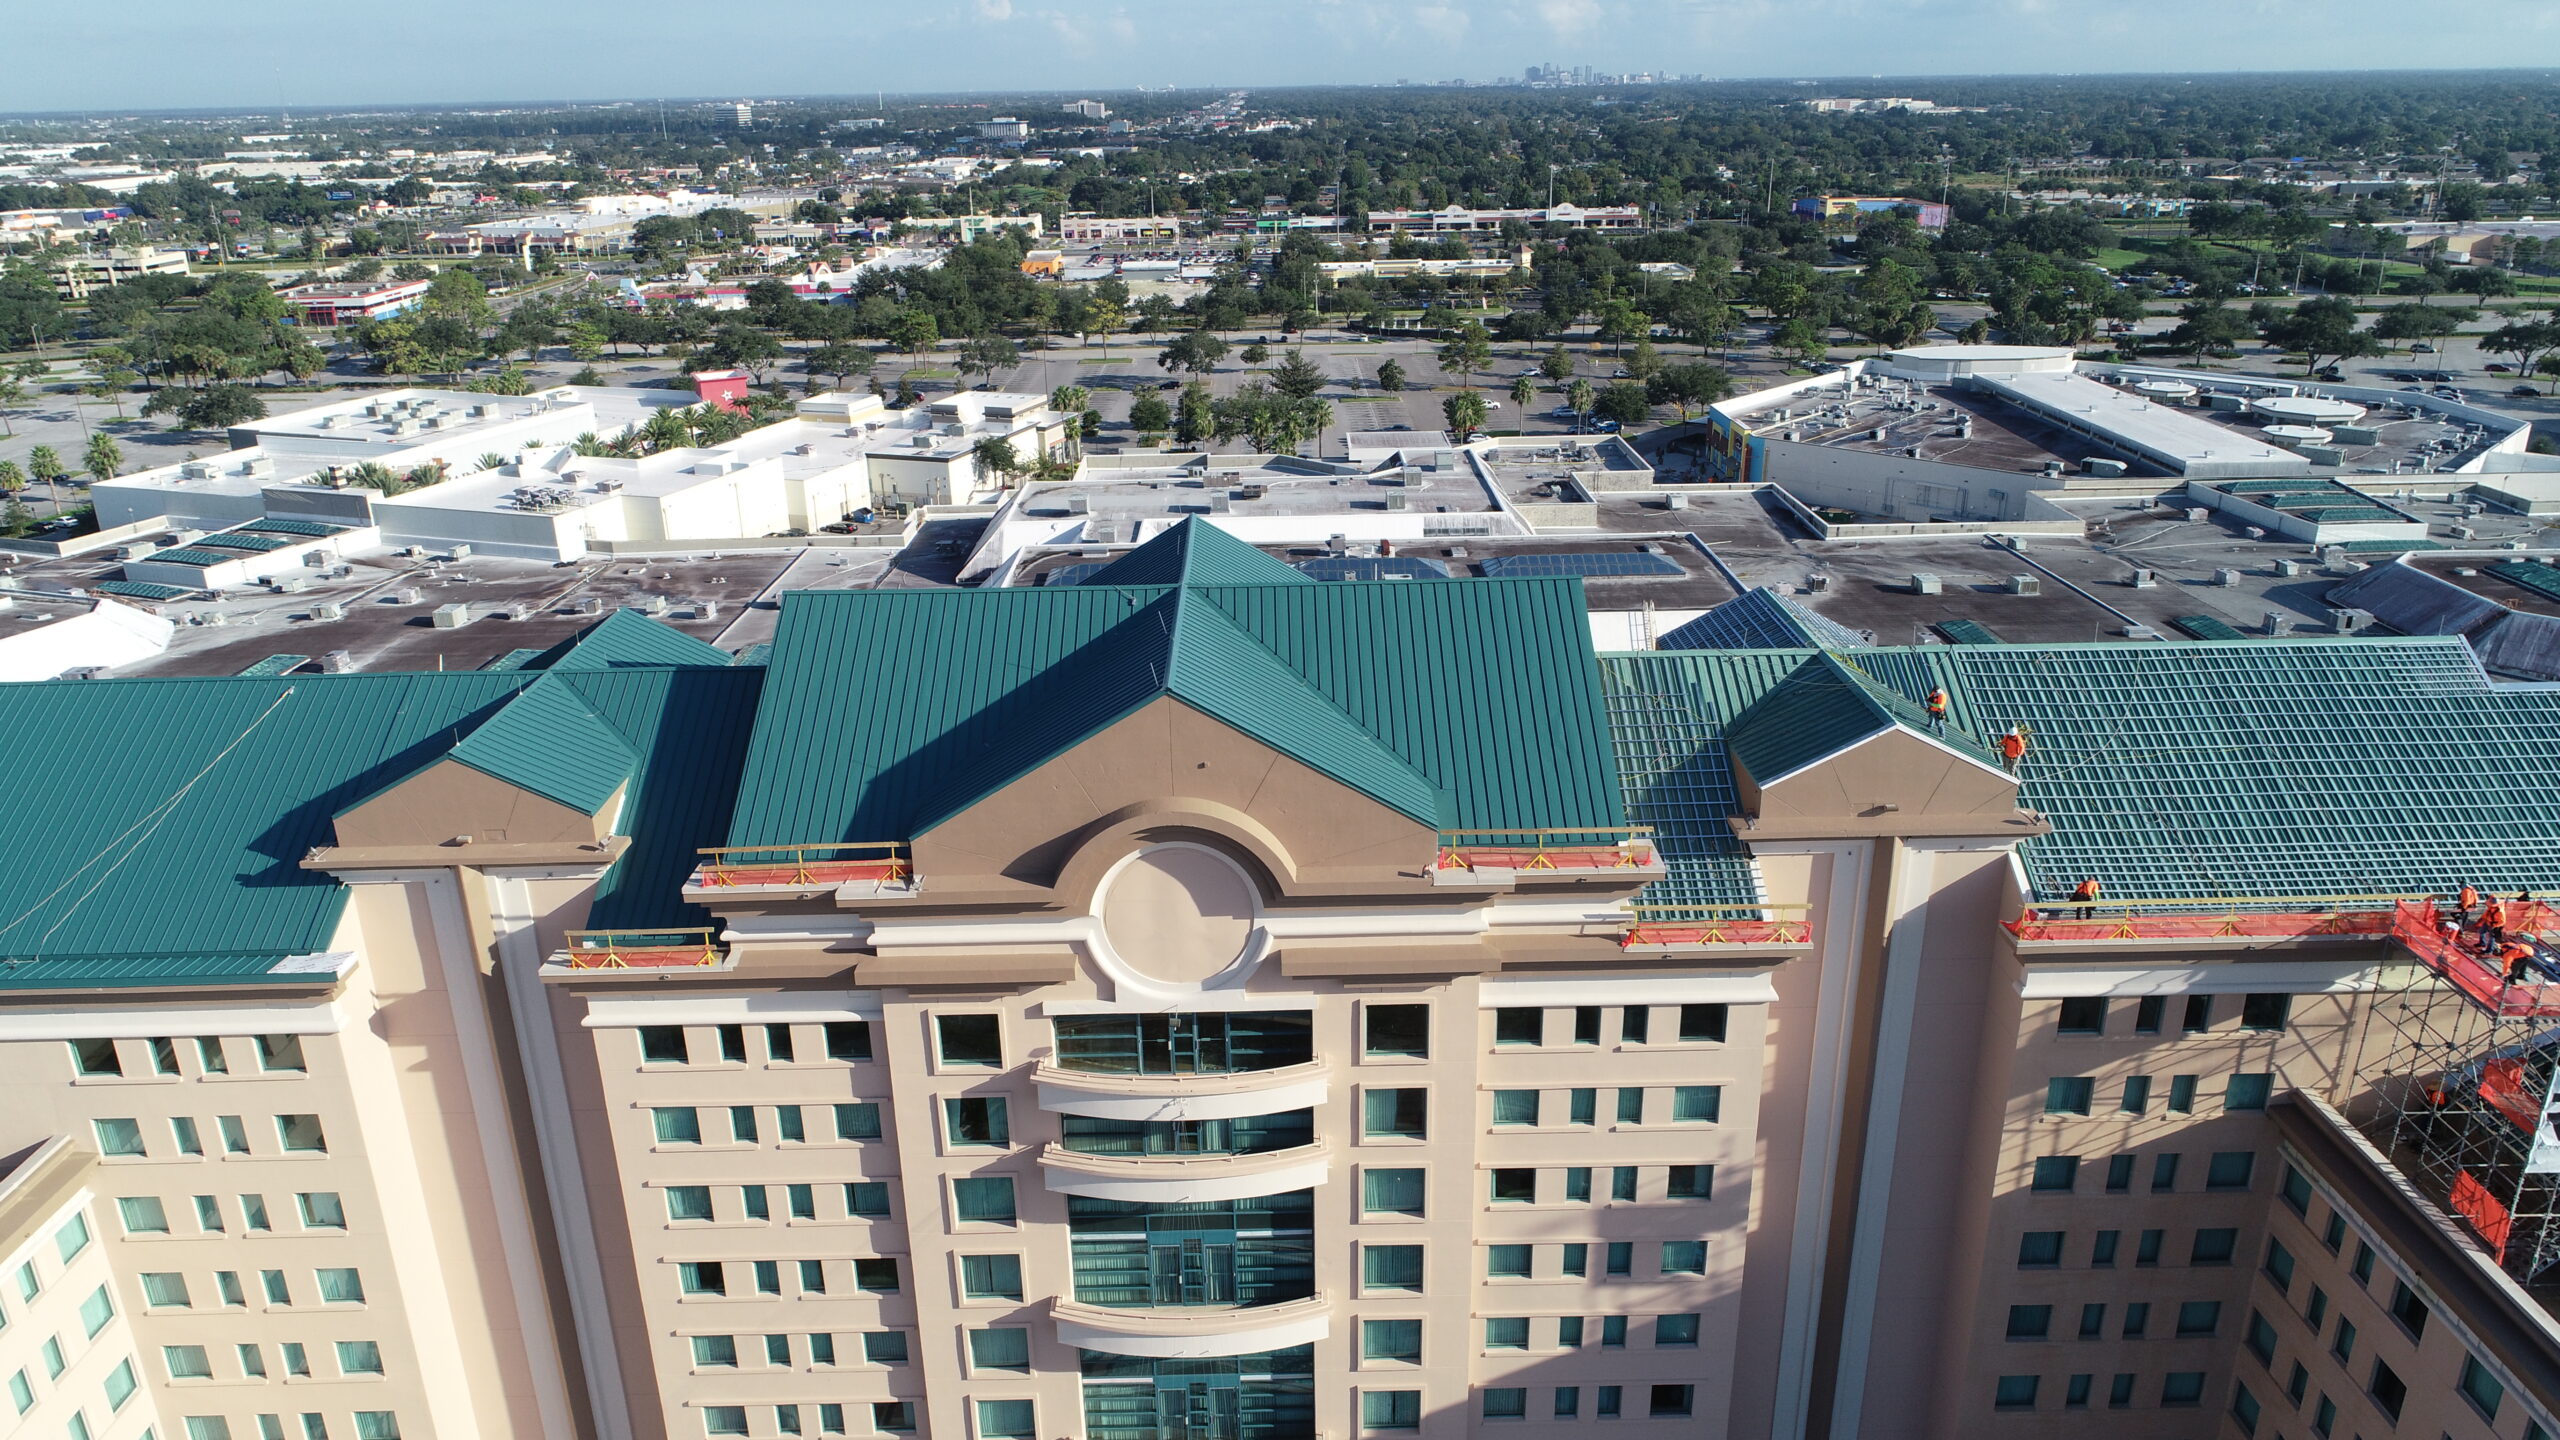 The Florida Hotel roof profile